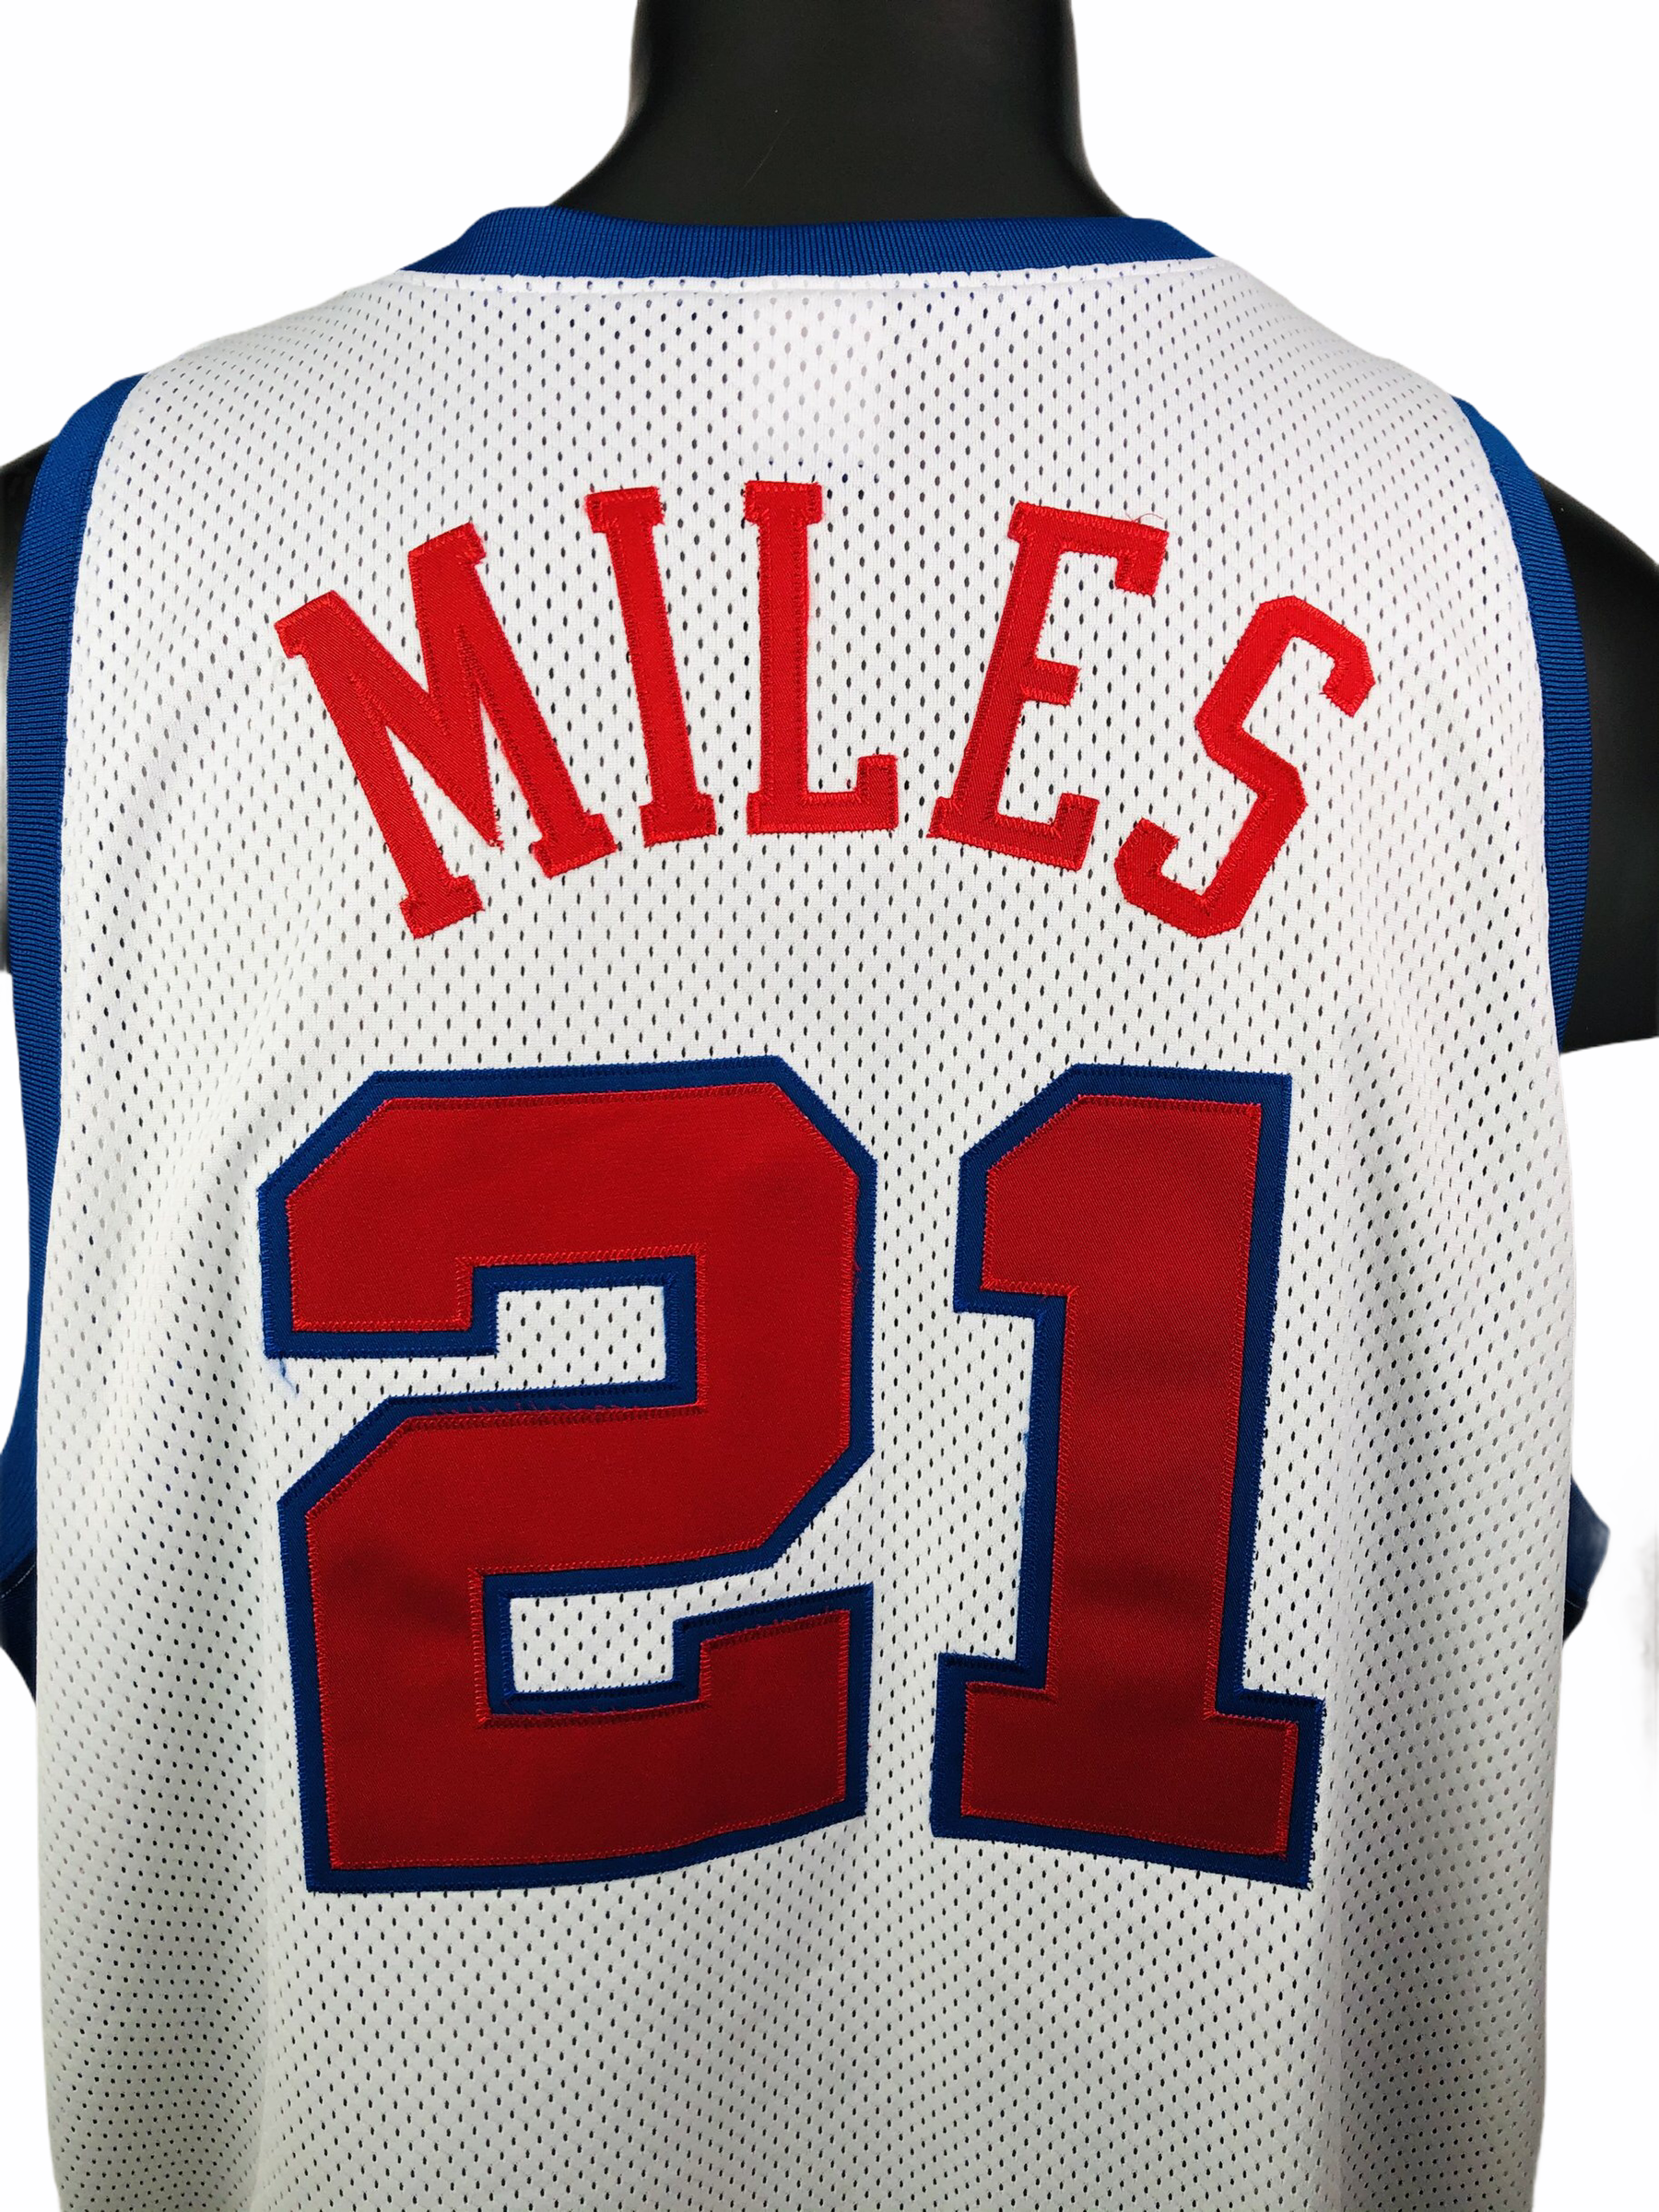 NBA Nike swingman Clippers Darius Miles jersey, L